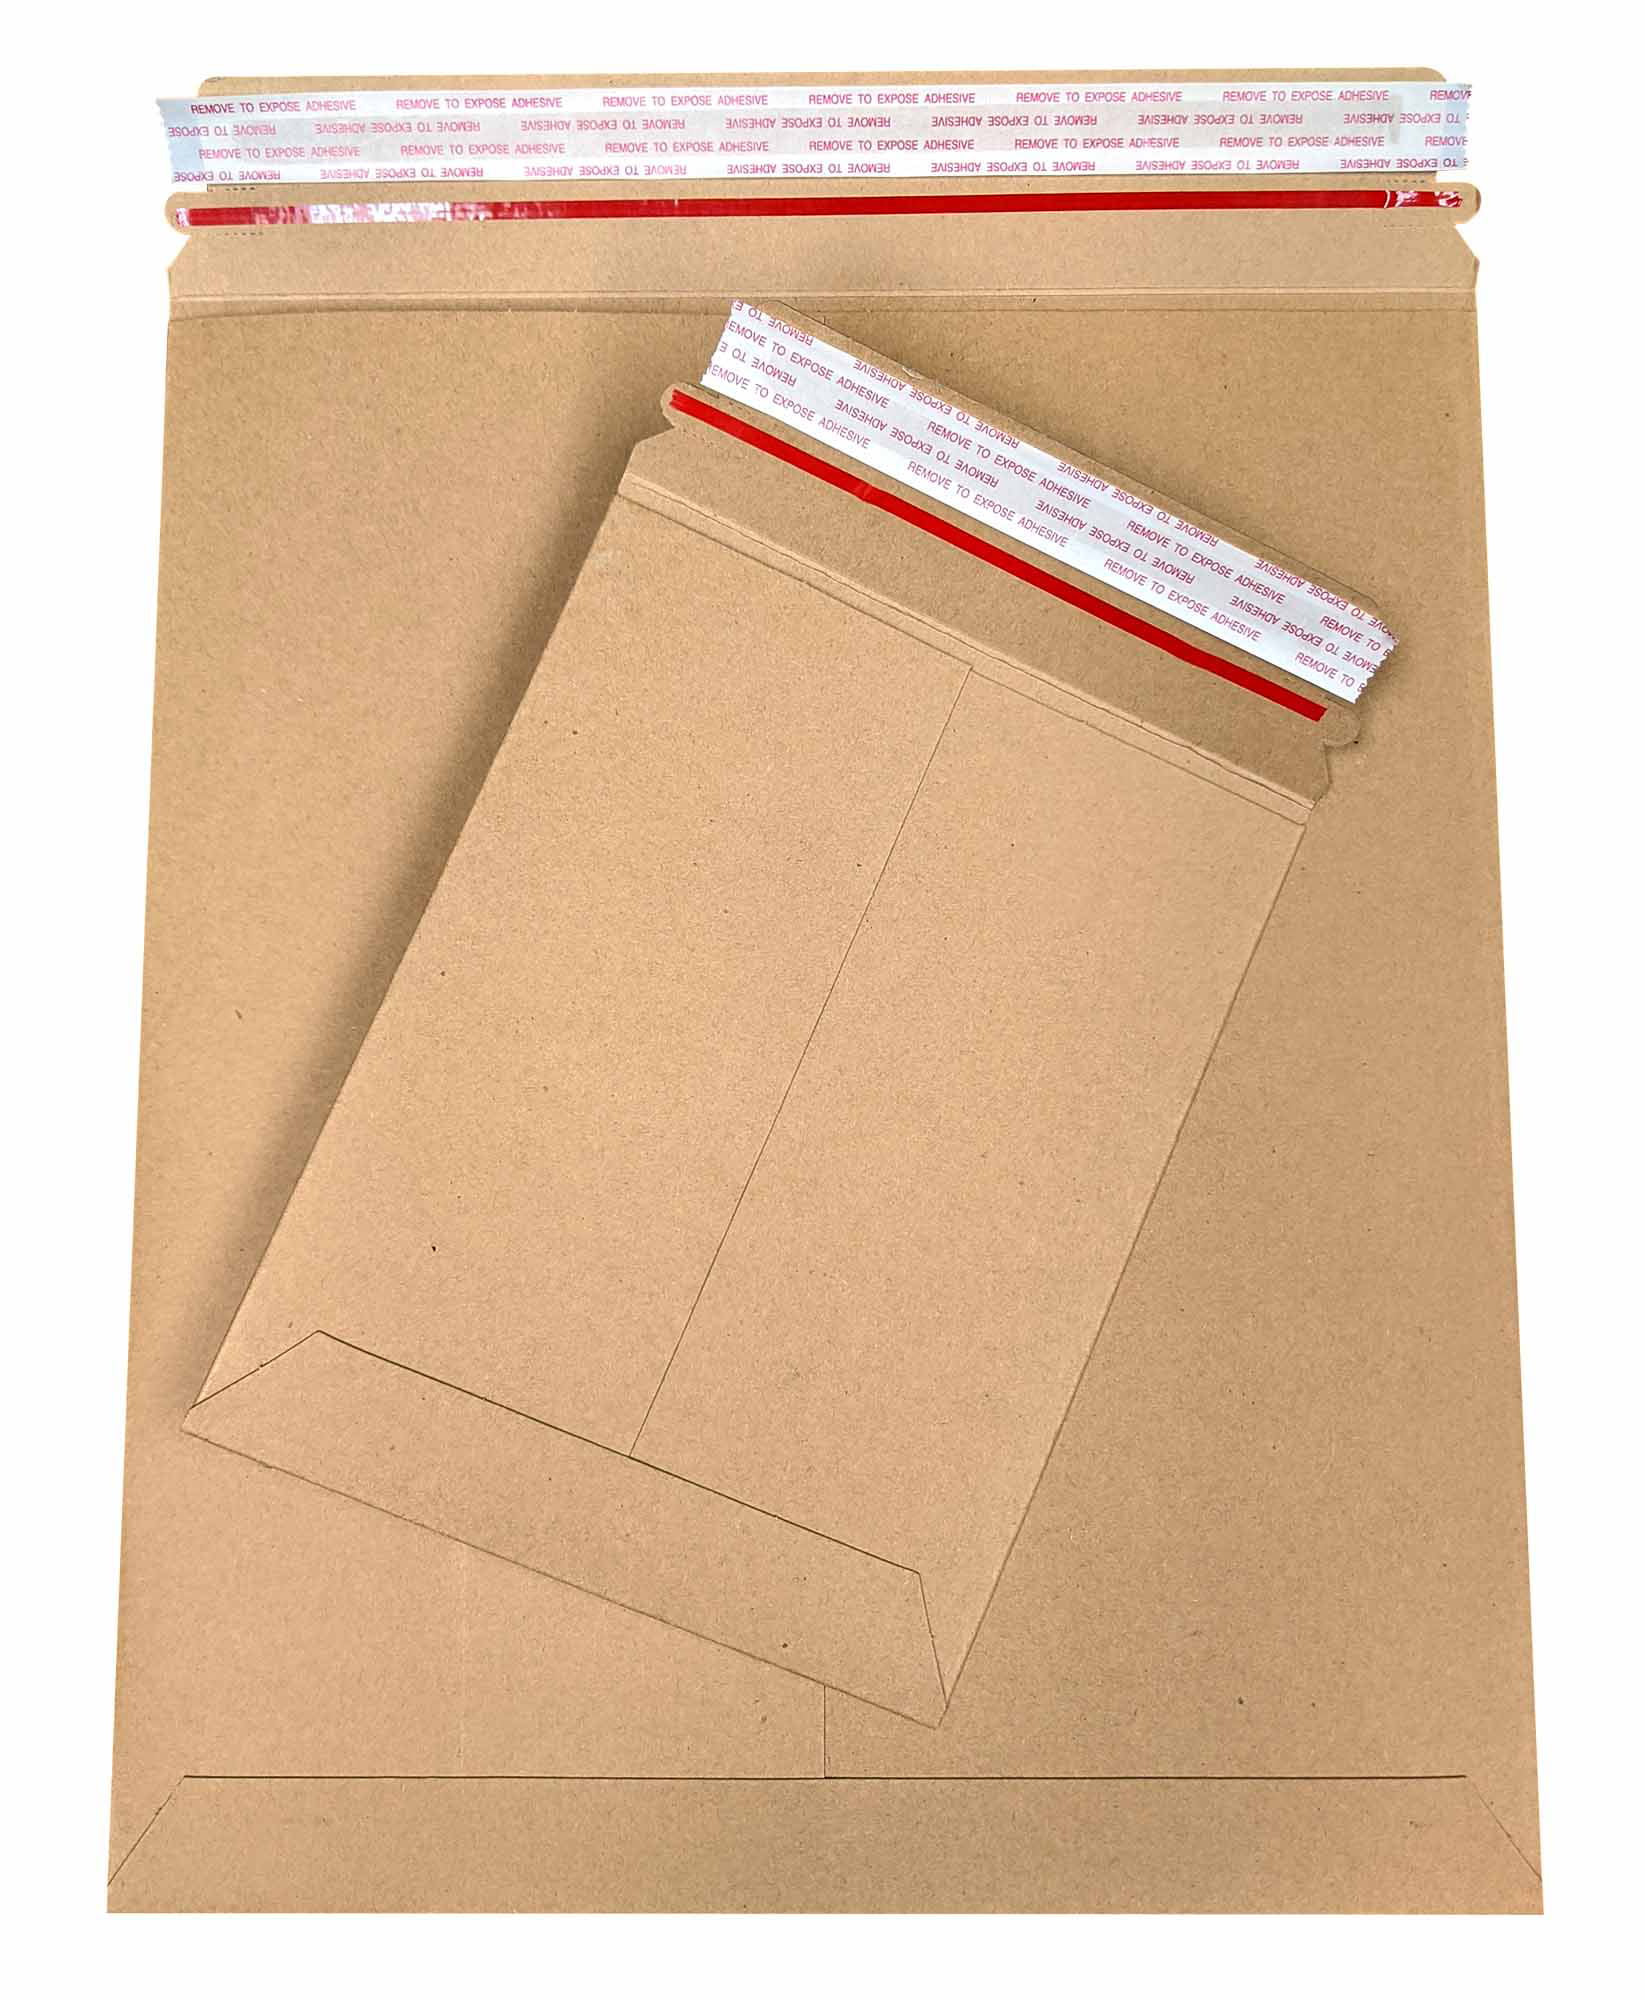 1000-9x11.5 Cardboard Envelope Mailers Flat Self-Seal Photo Mailer Ship 